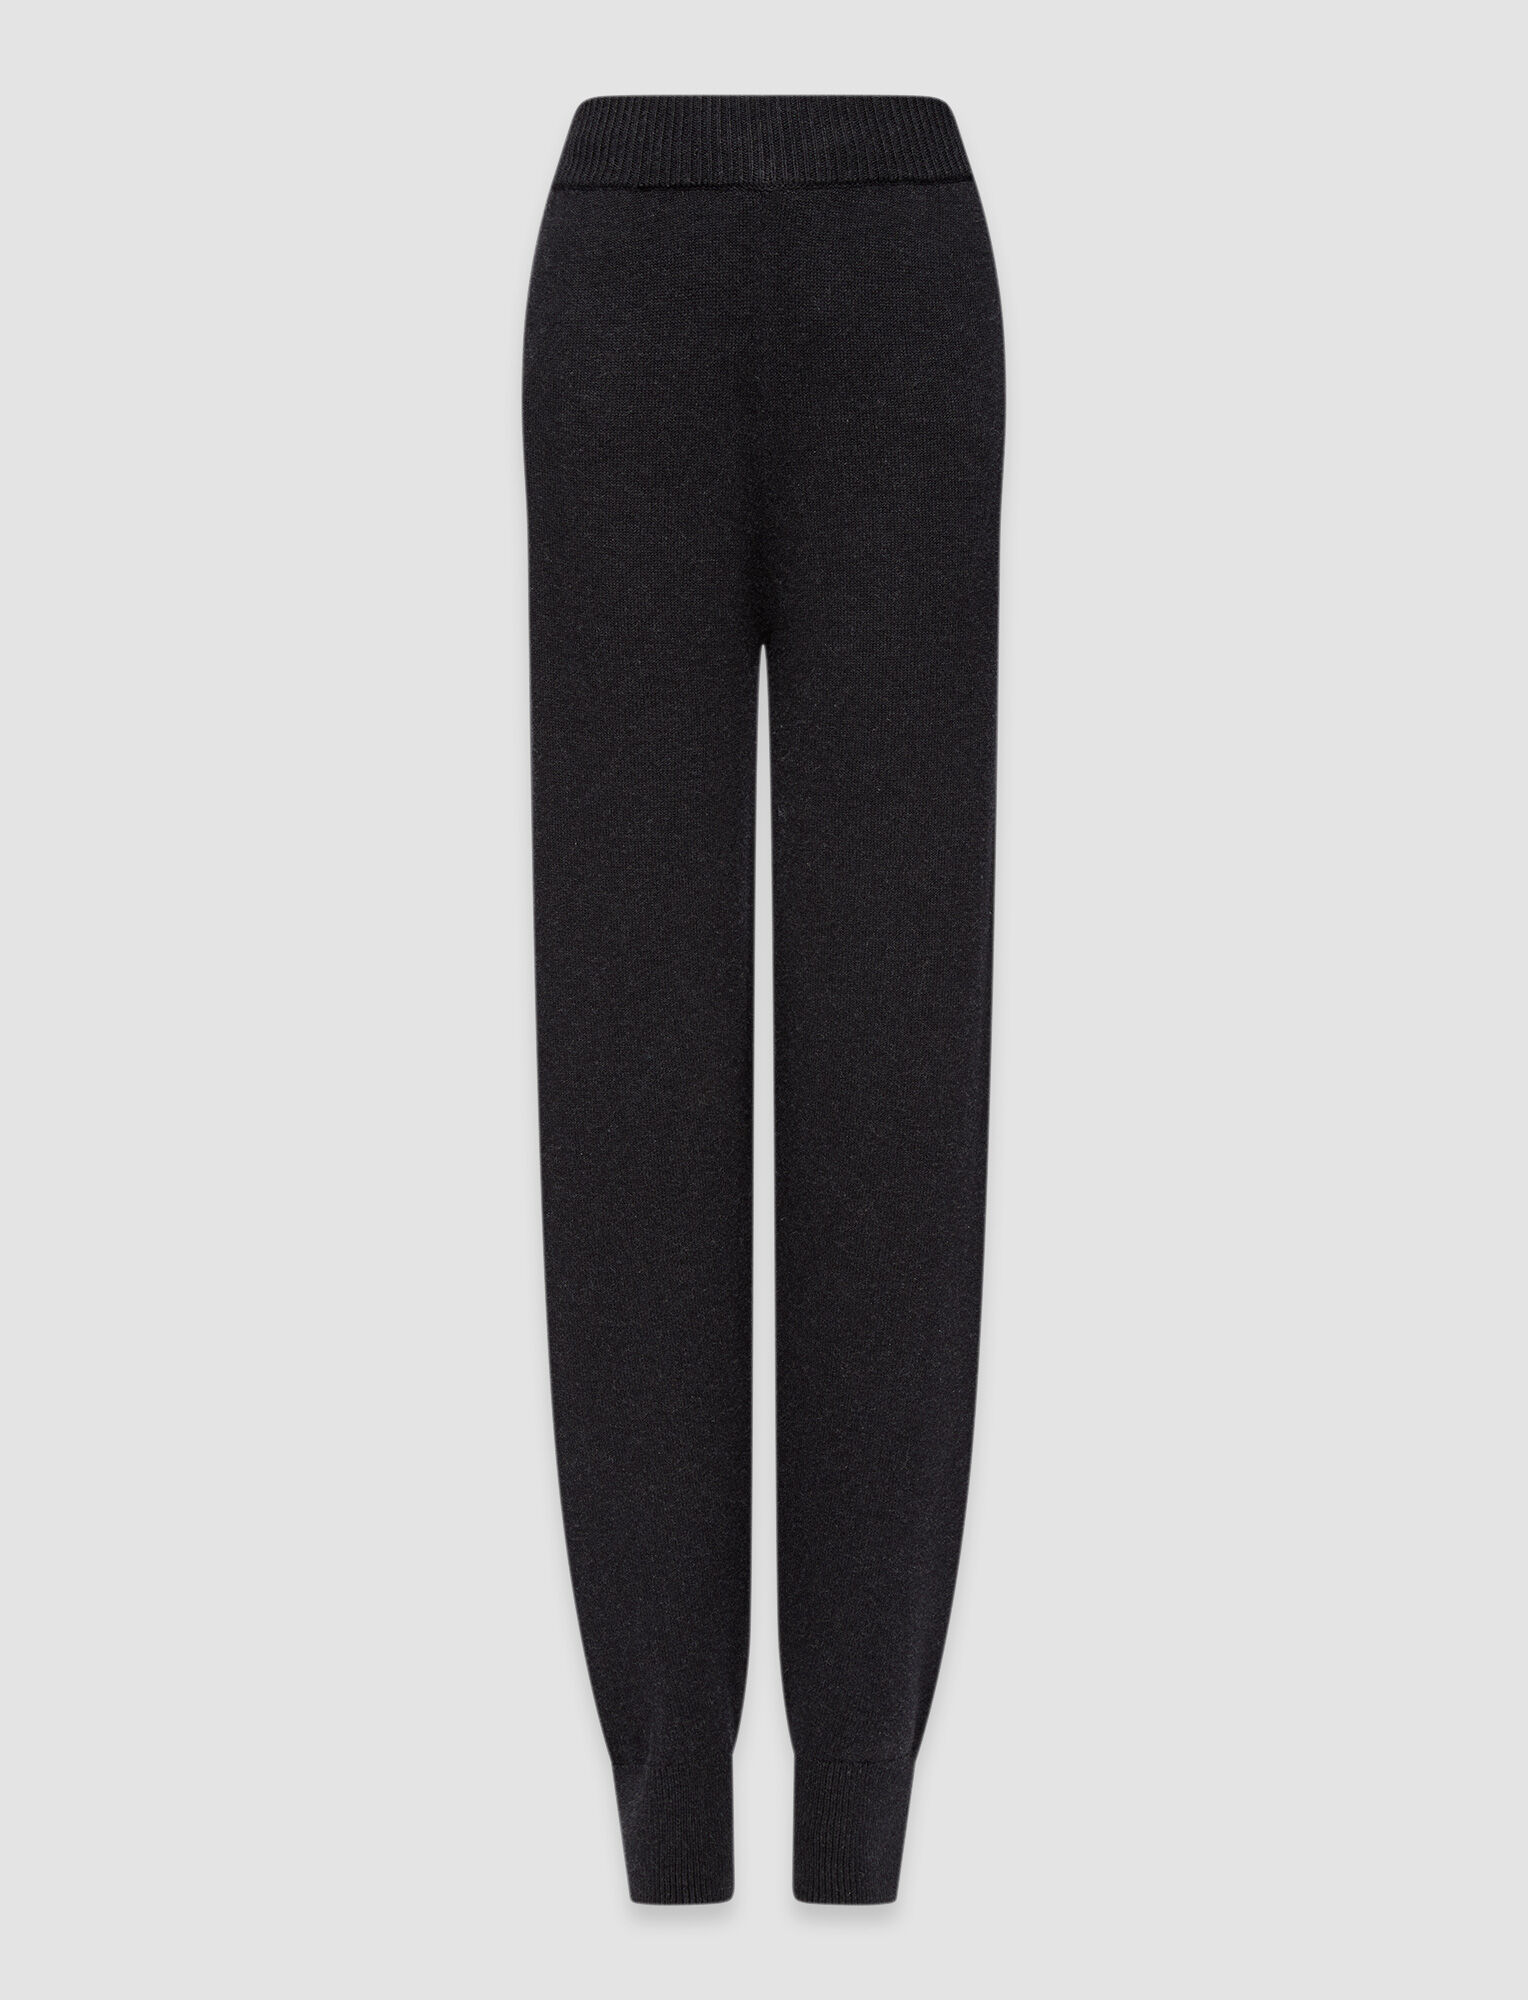 Joseph, Silk Cashmere Loungewear Trousers, in Dark grey